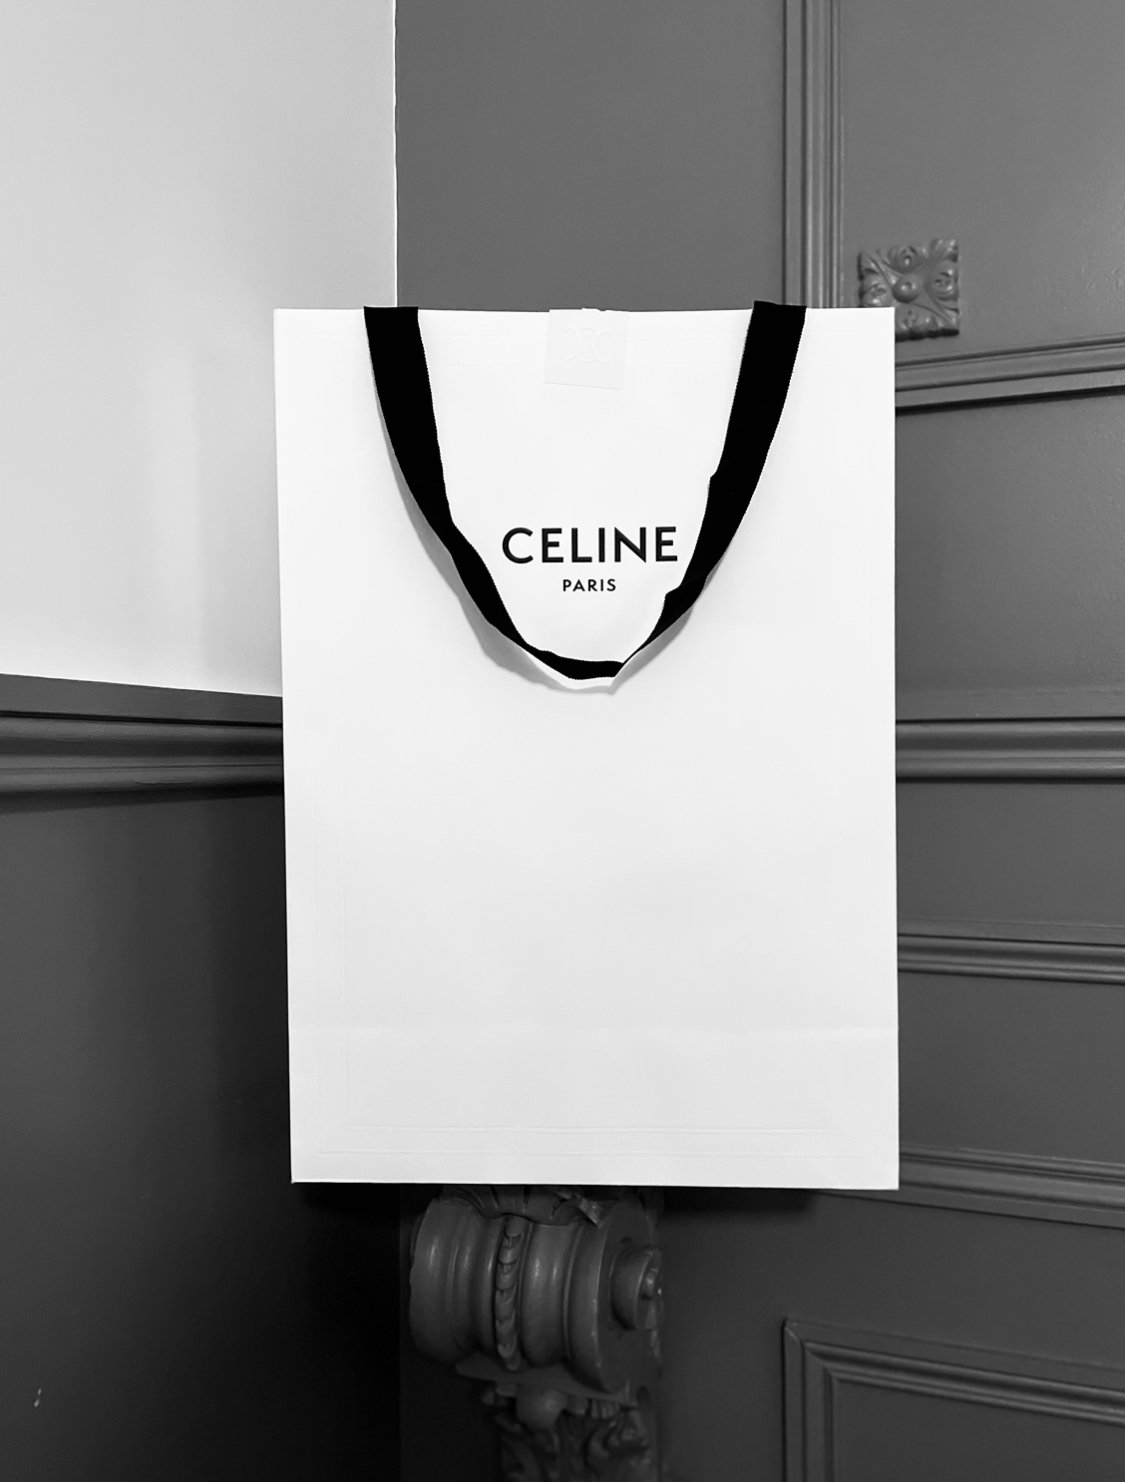 Falling Head Over Heels for 'New' Celine - Buying a Celine